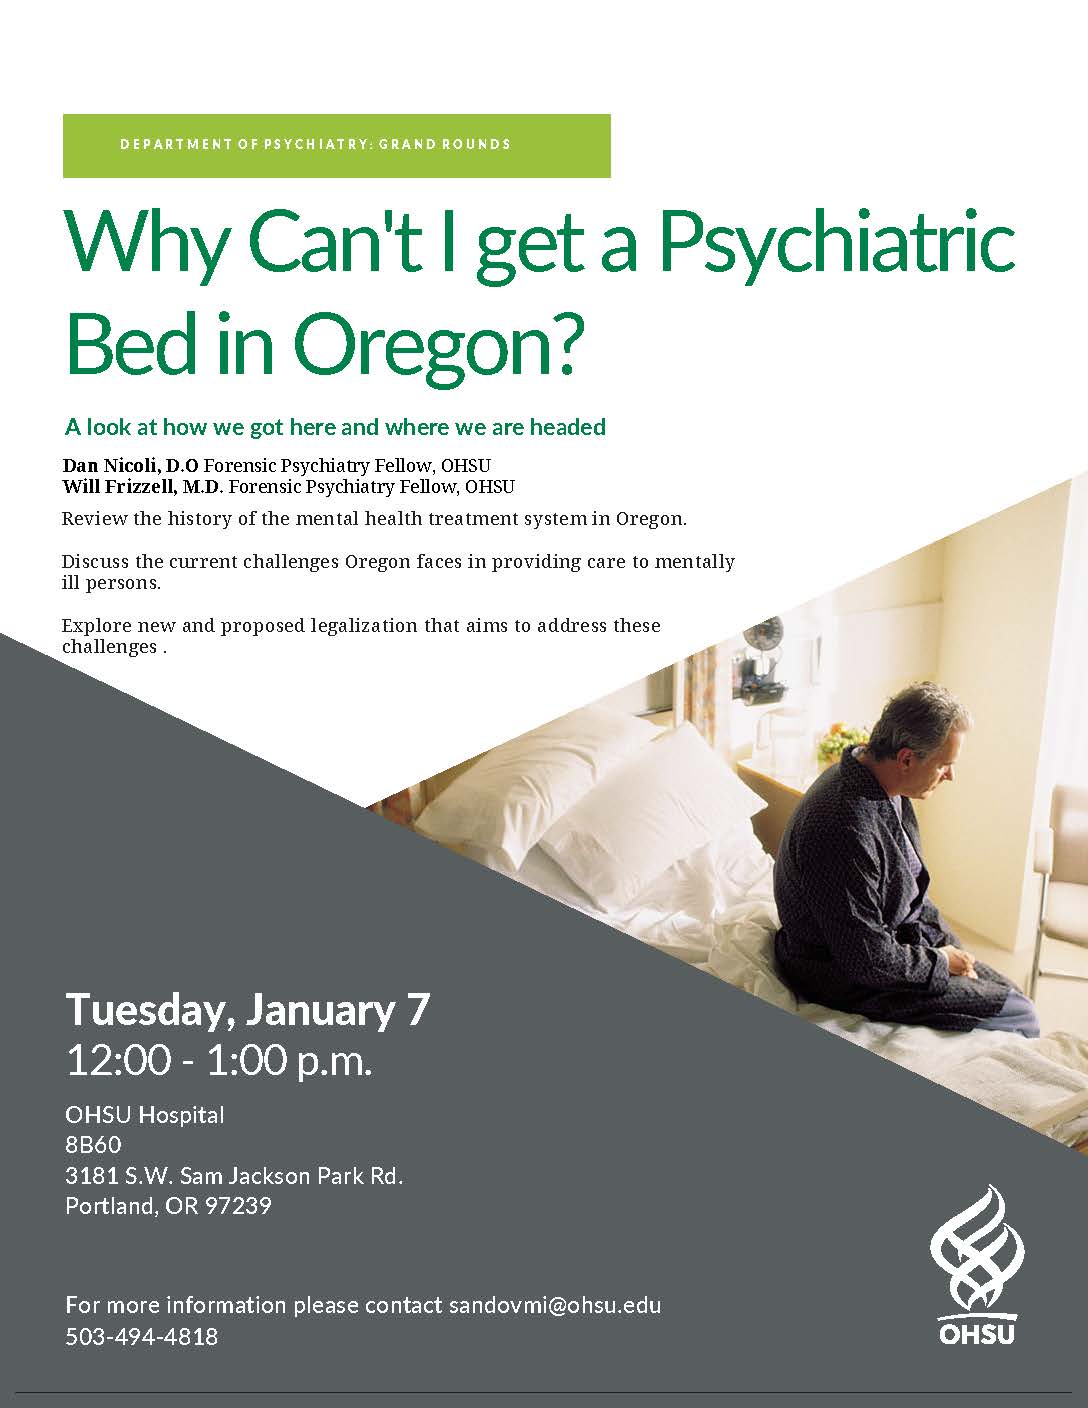 January 7, 2020 Psychiatry Grand Rounds